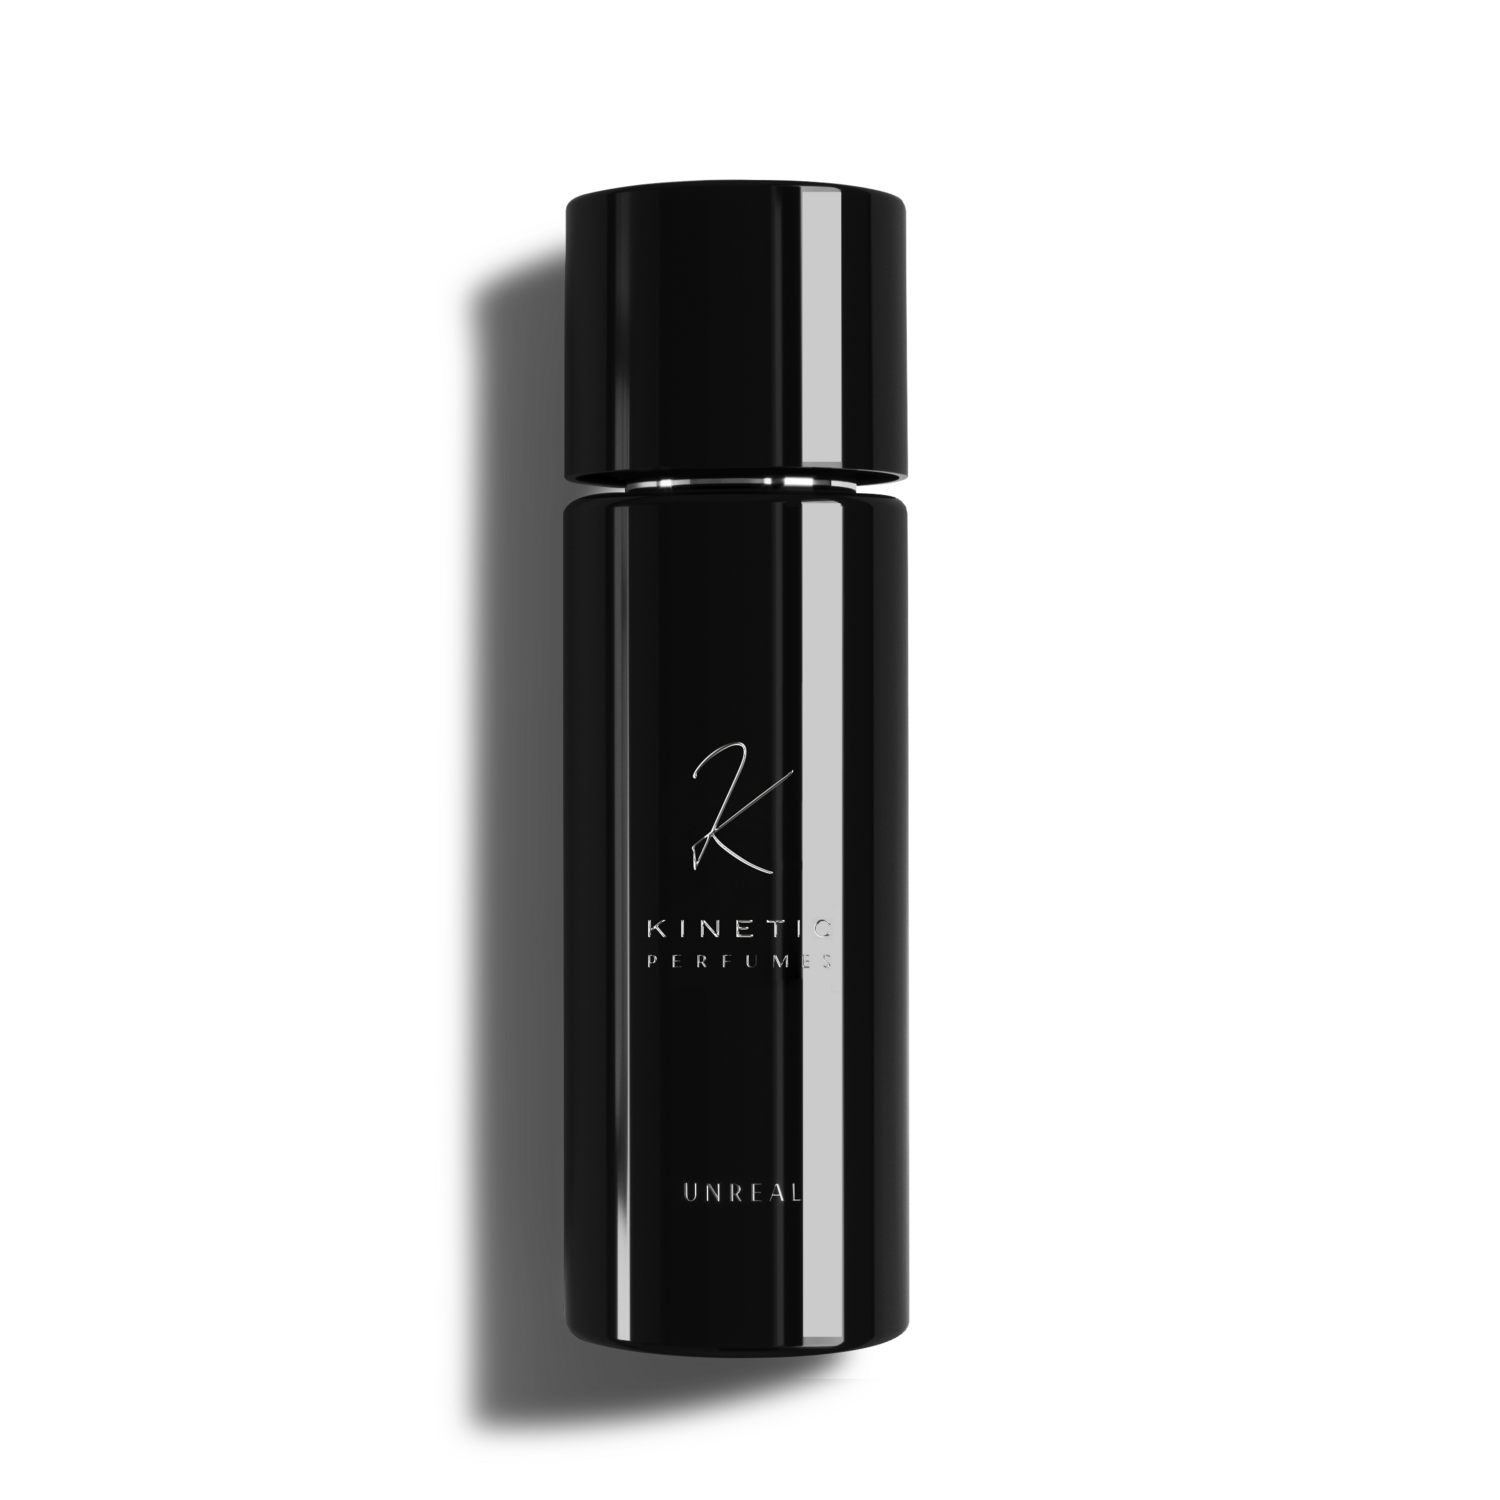 UNREAL - Kinetic Perfumes - 100ml Parfum / 2ml